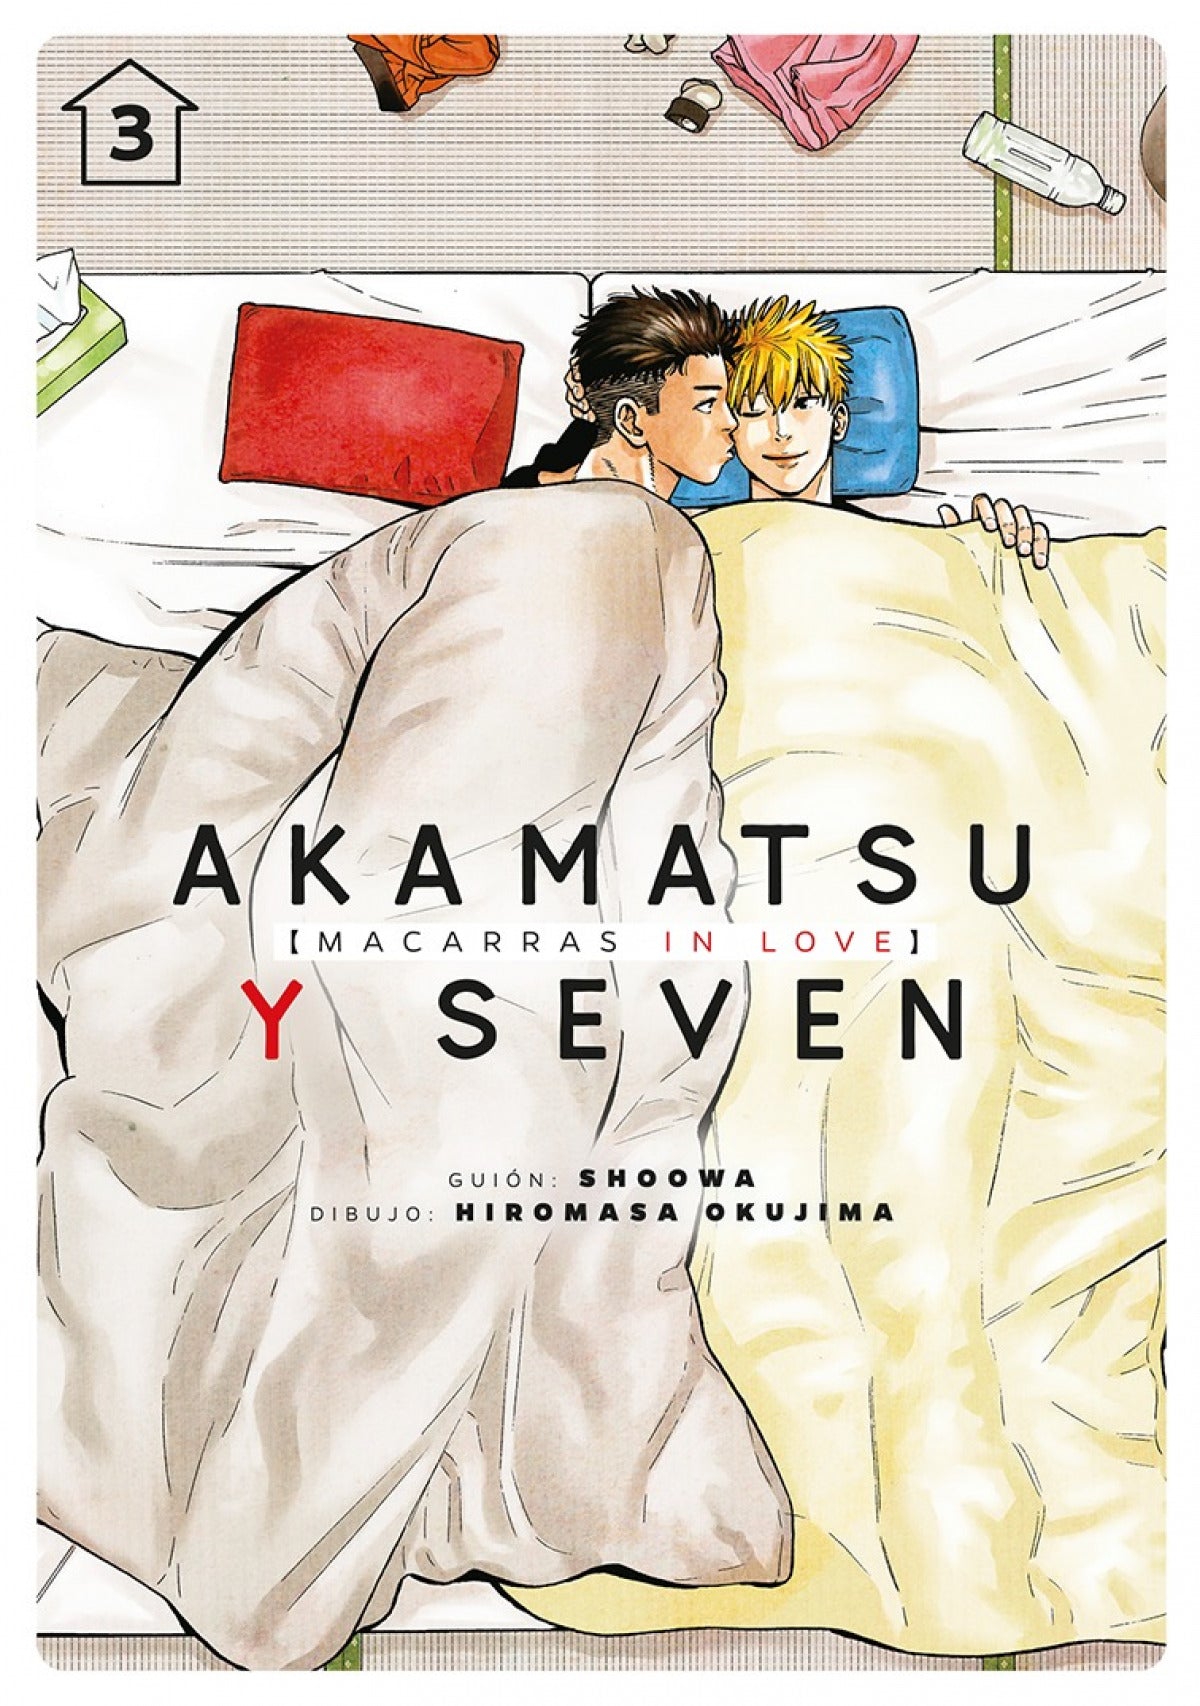 Akamatsu y Seven, macarras in love, vol. 3 de SHOOWA